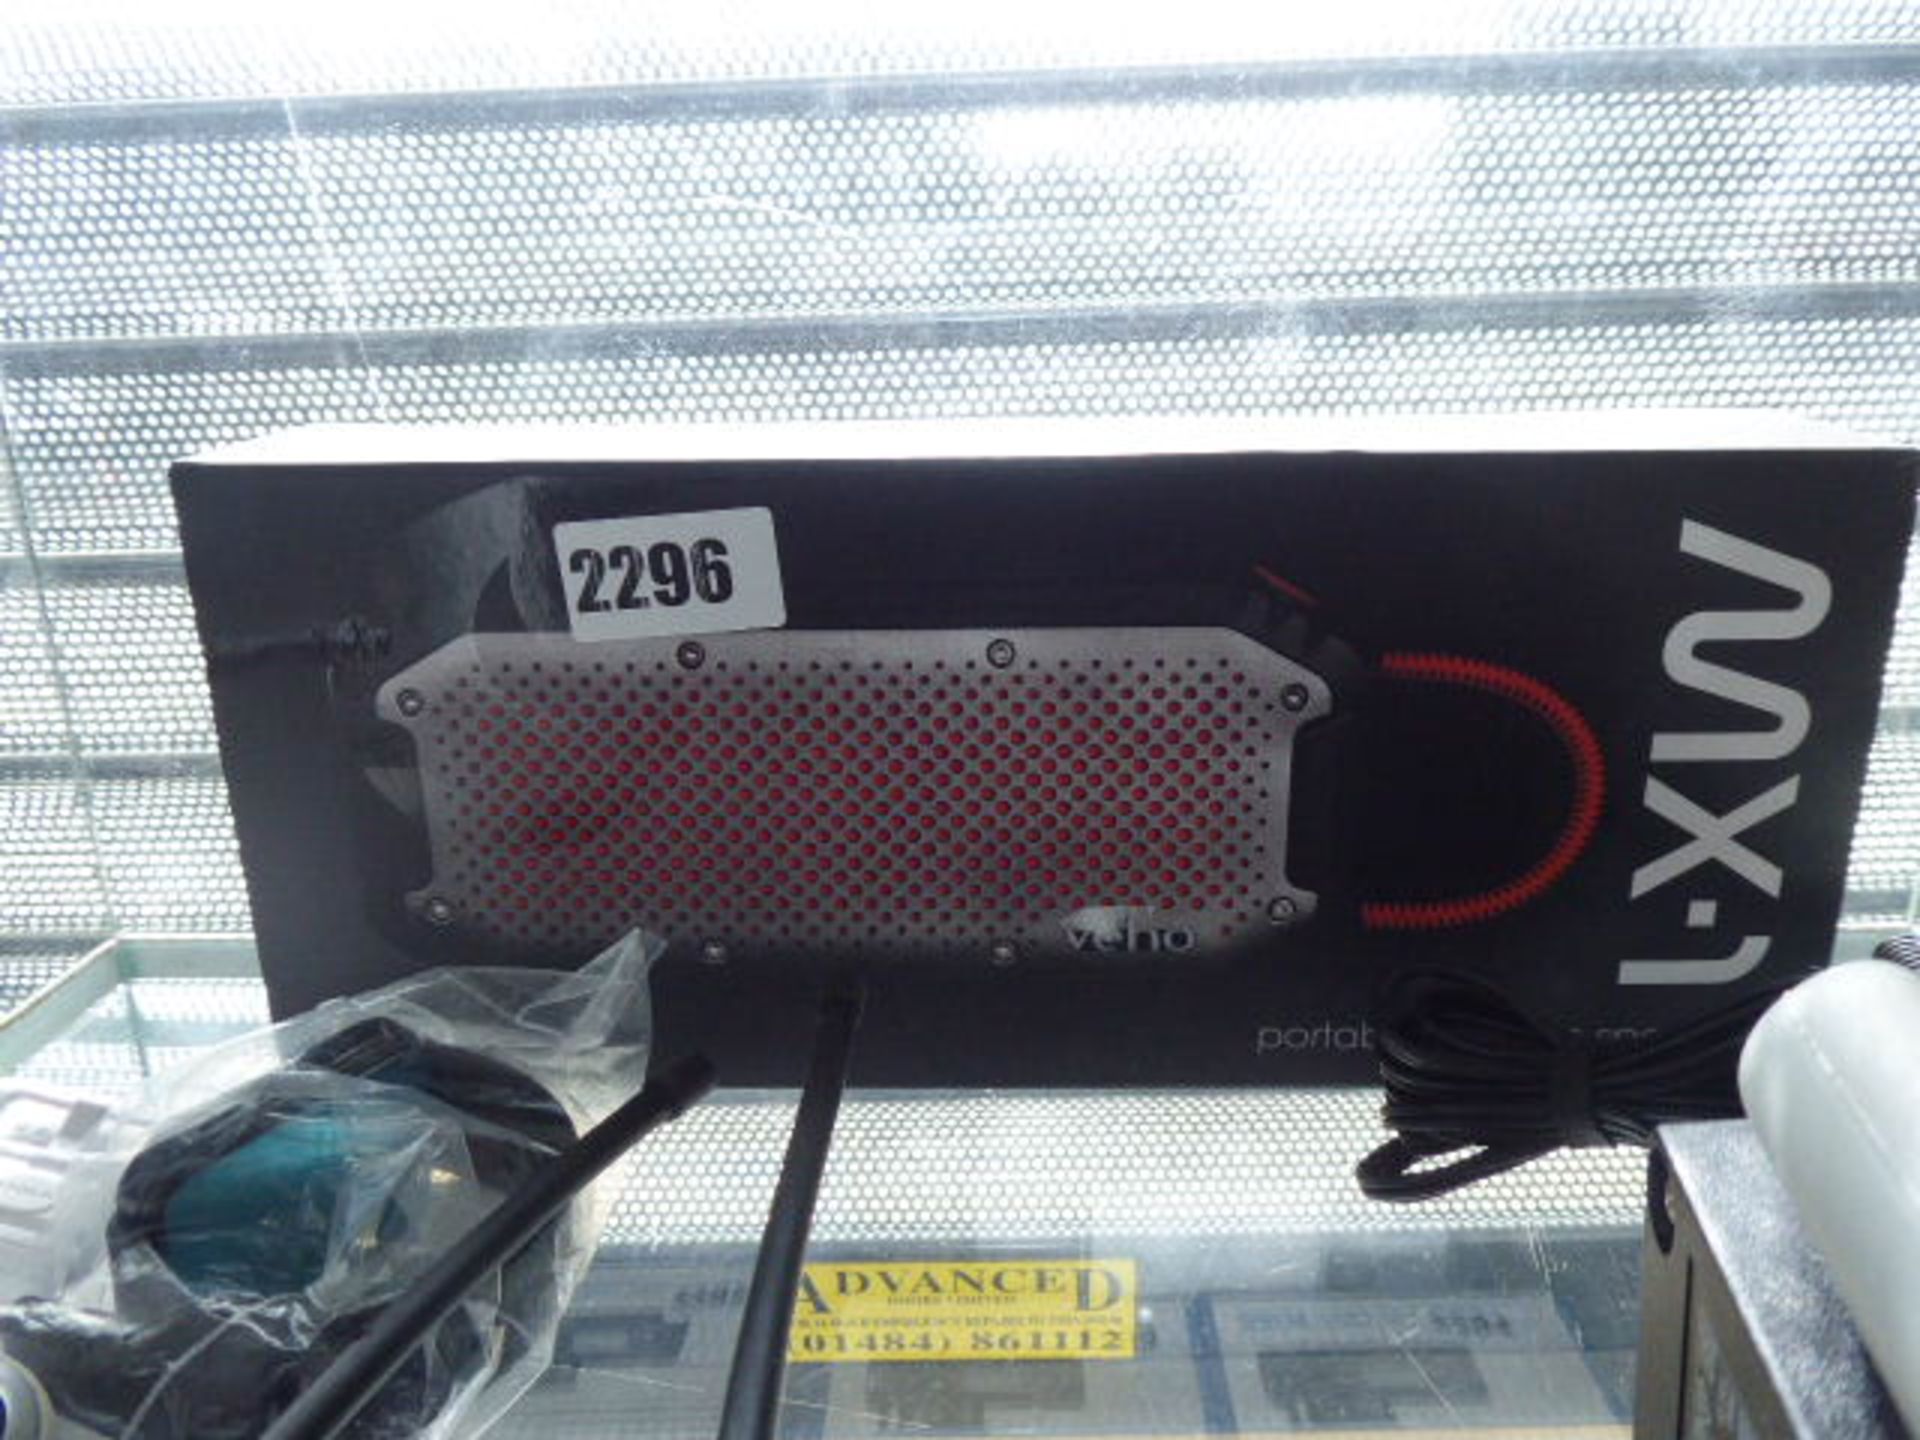 Veho MX1 portable speaker with box